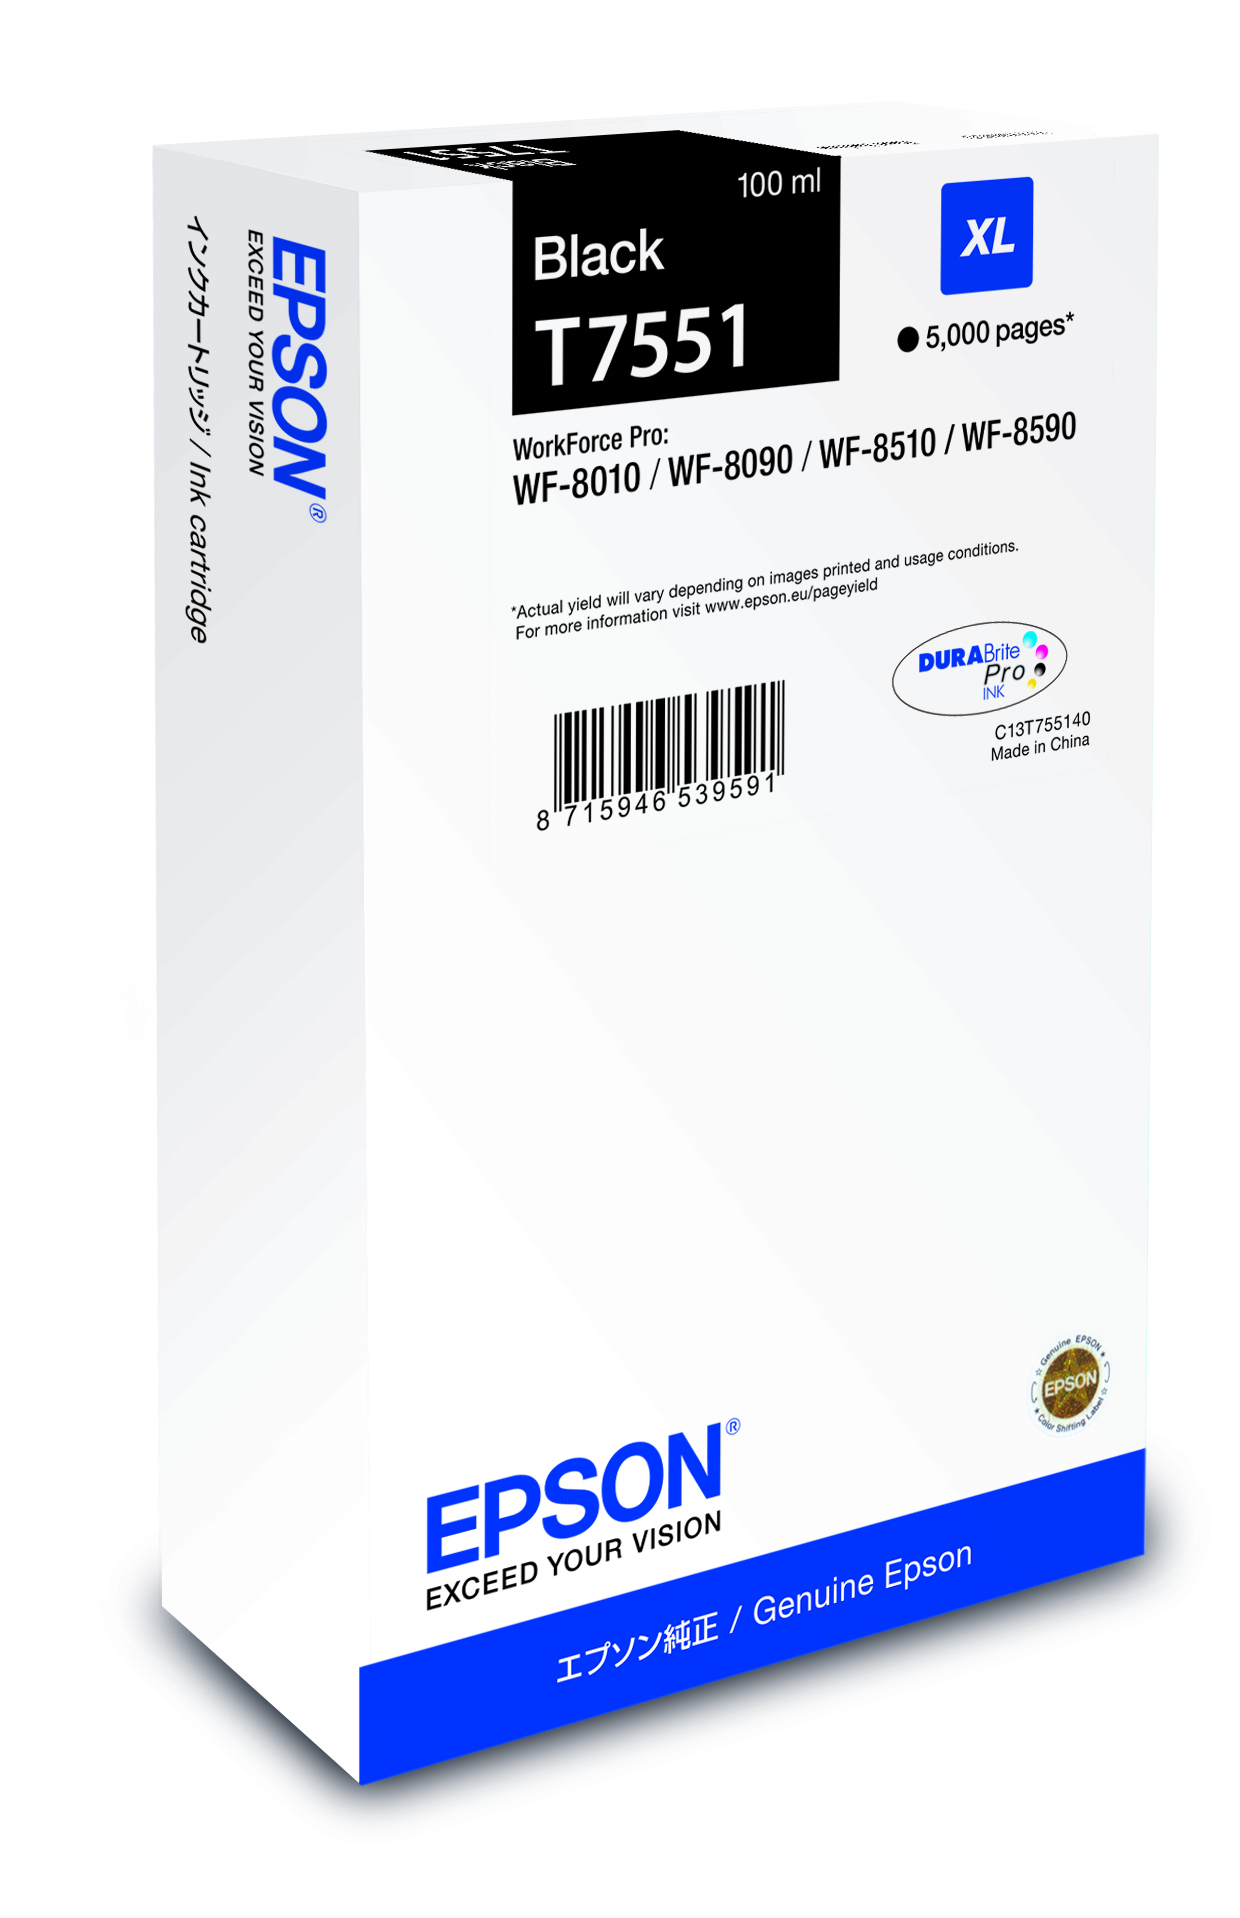 Epson Ink Cartridge XL Black single pack / zwart